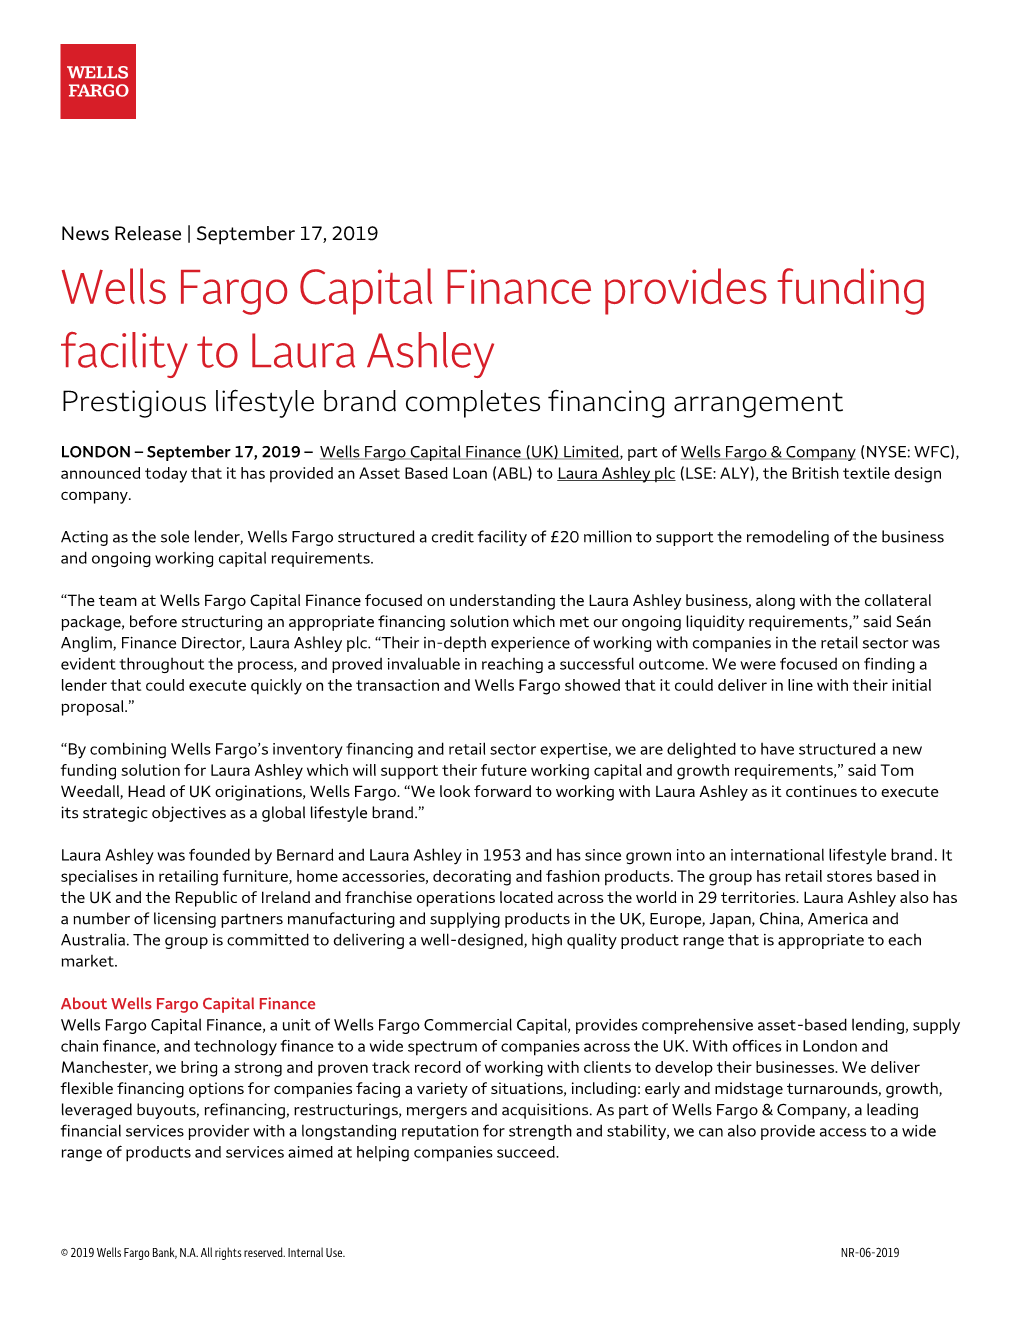 Wells Fargo Capital Finance Provides Funding Facility to Laura Ashley Prestigious Lifestyle Brand Completes Financing Arrangement